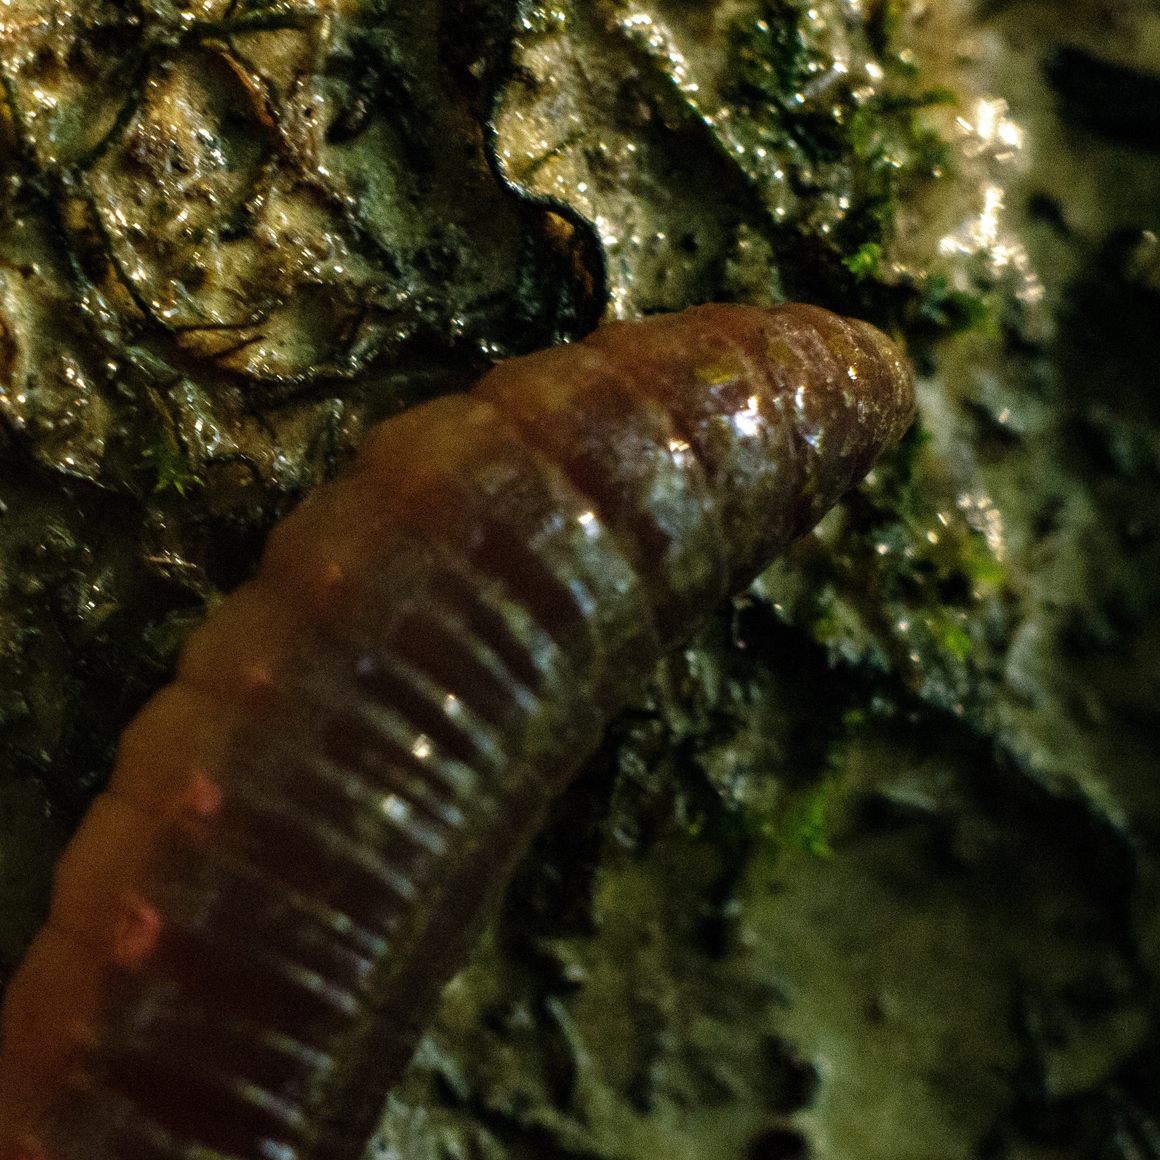 giant killer worm